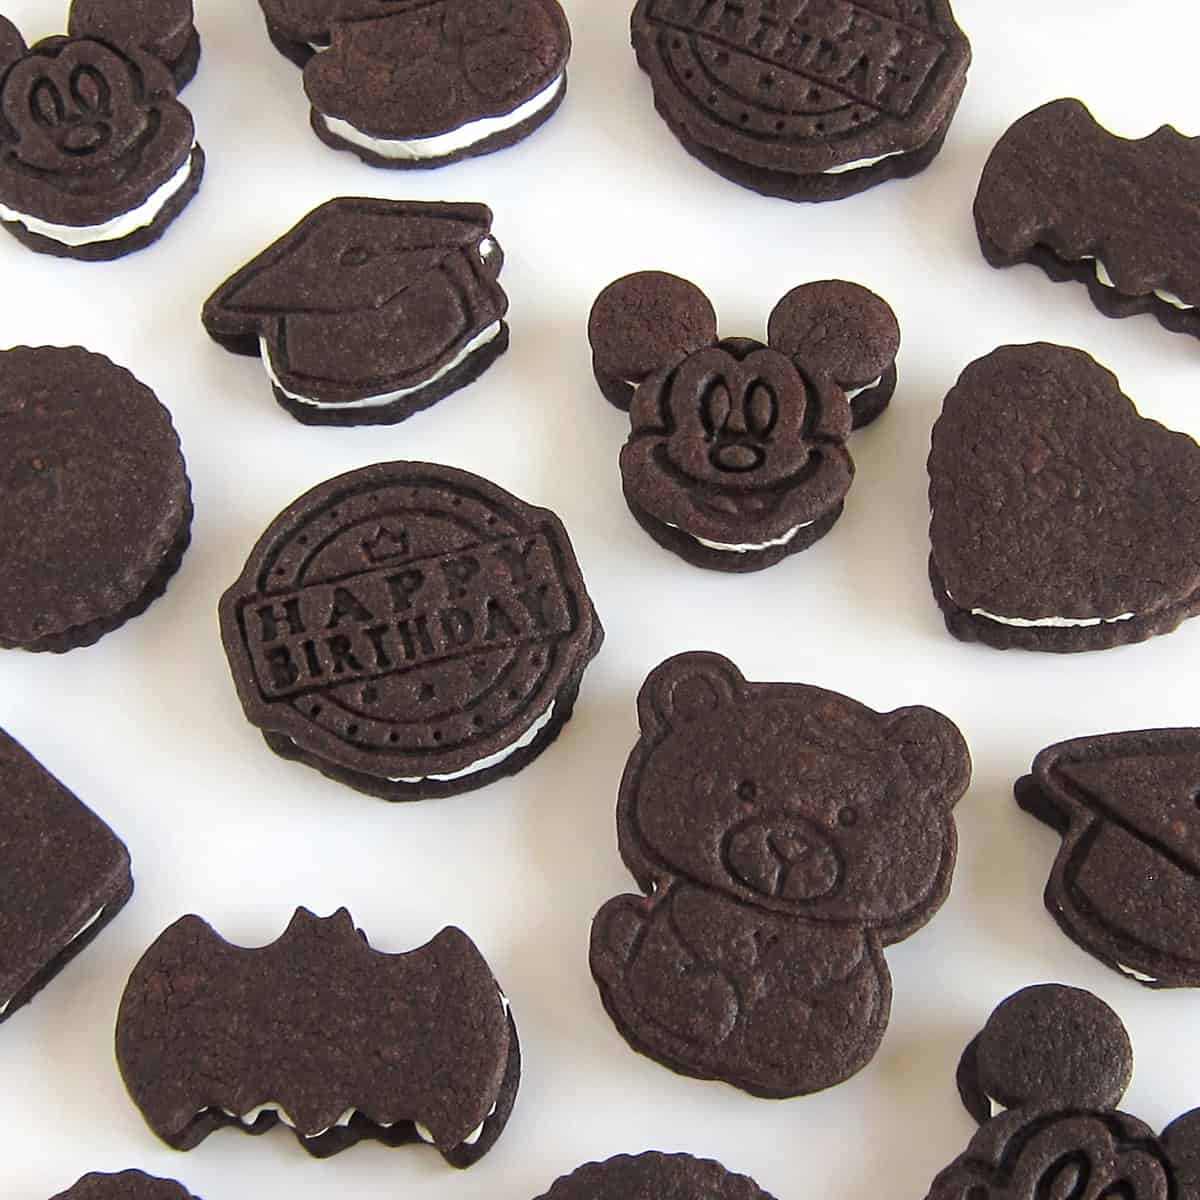 chocolate sandwich cookies shaped like bears, bats, hearts, Mickey Mouse, and more